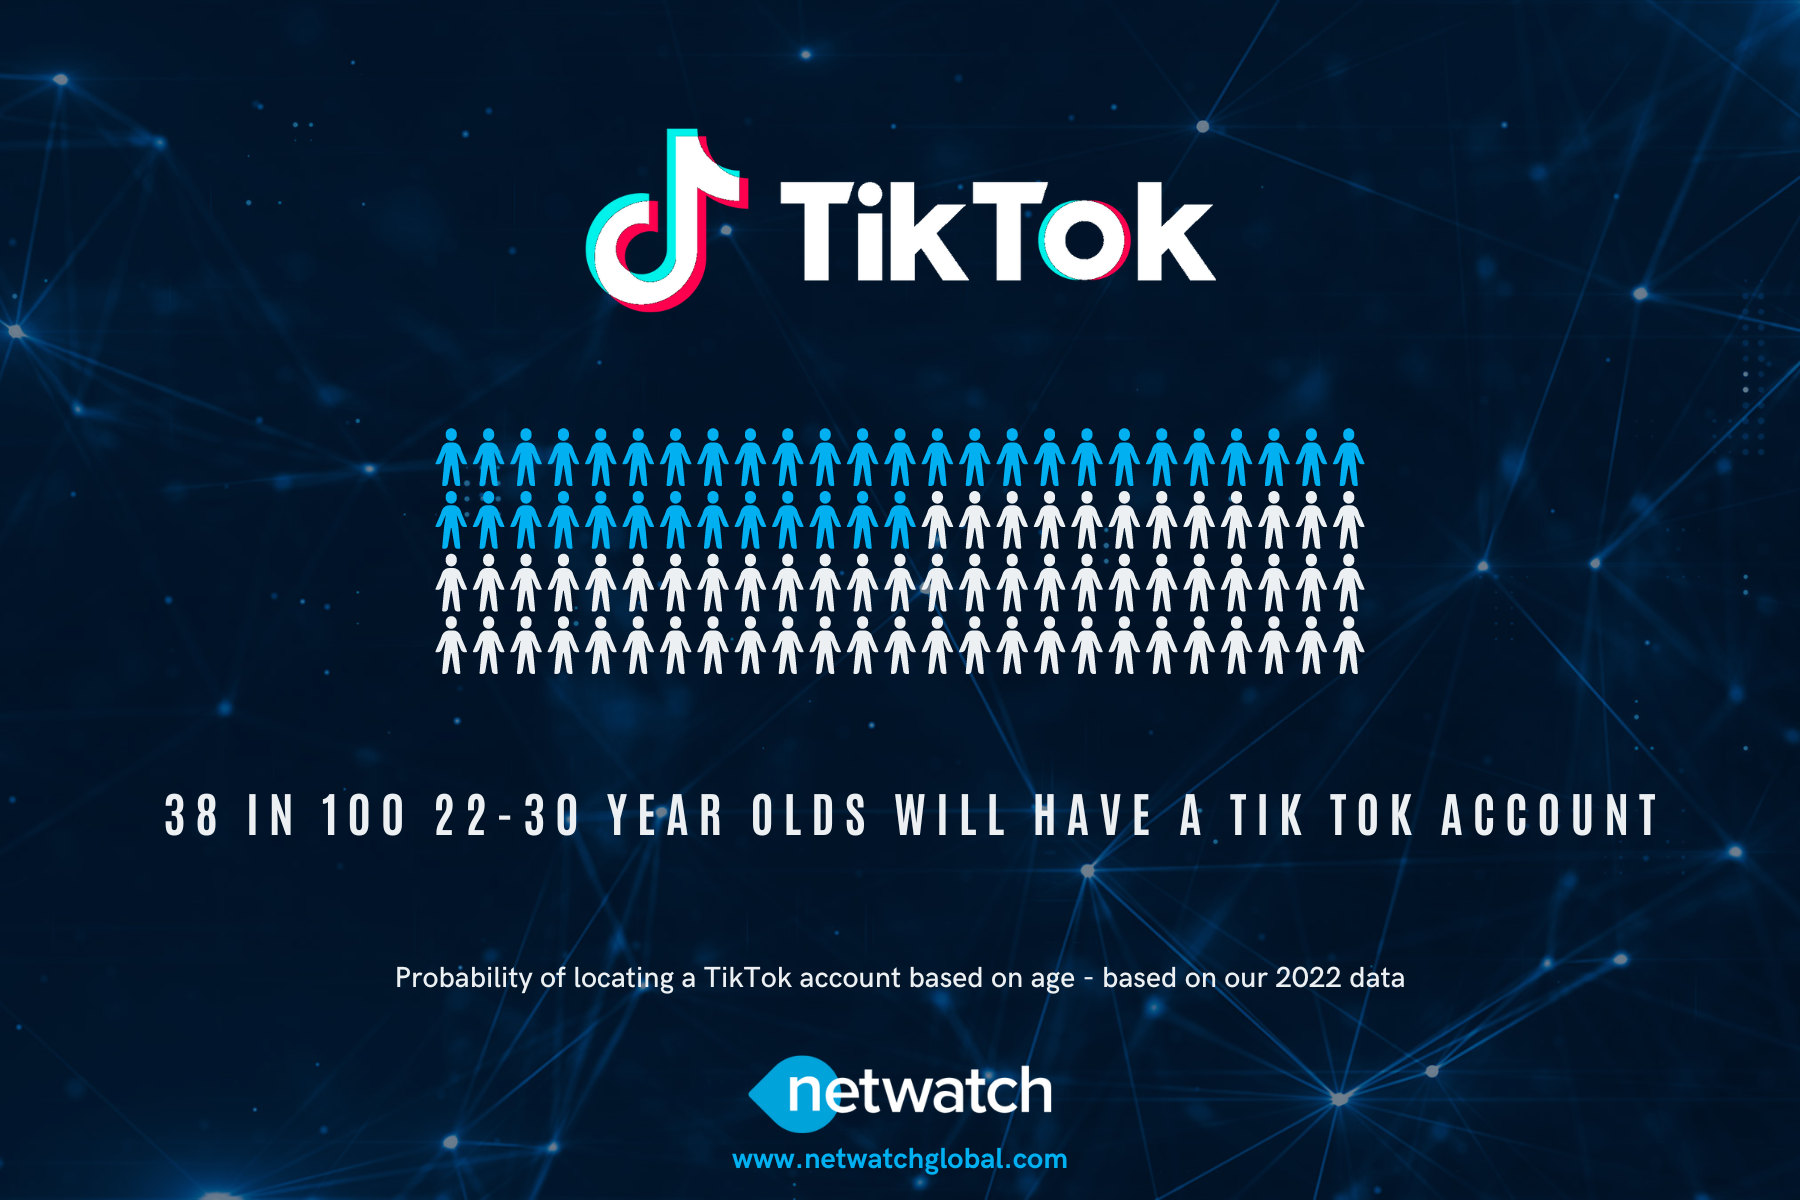 Probability of locating TikTok at the 22-30 age range